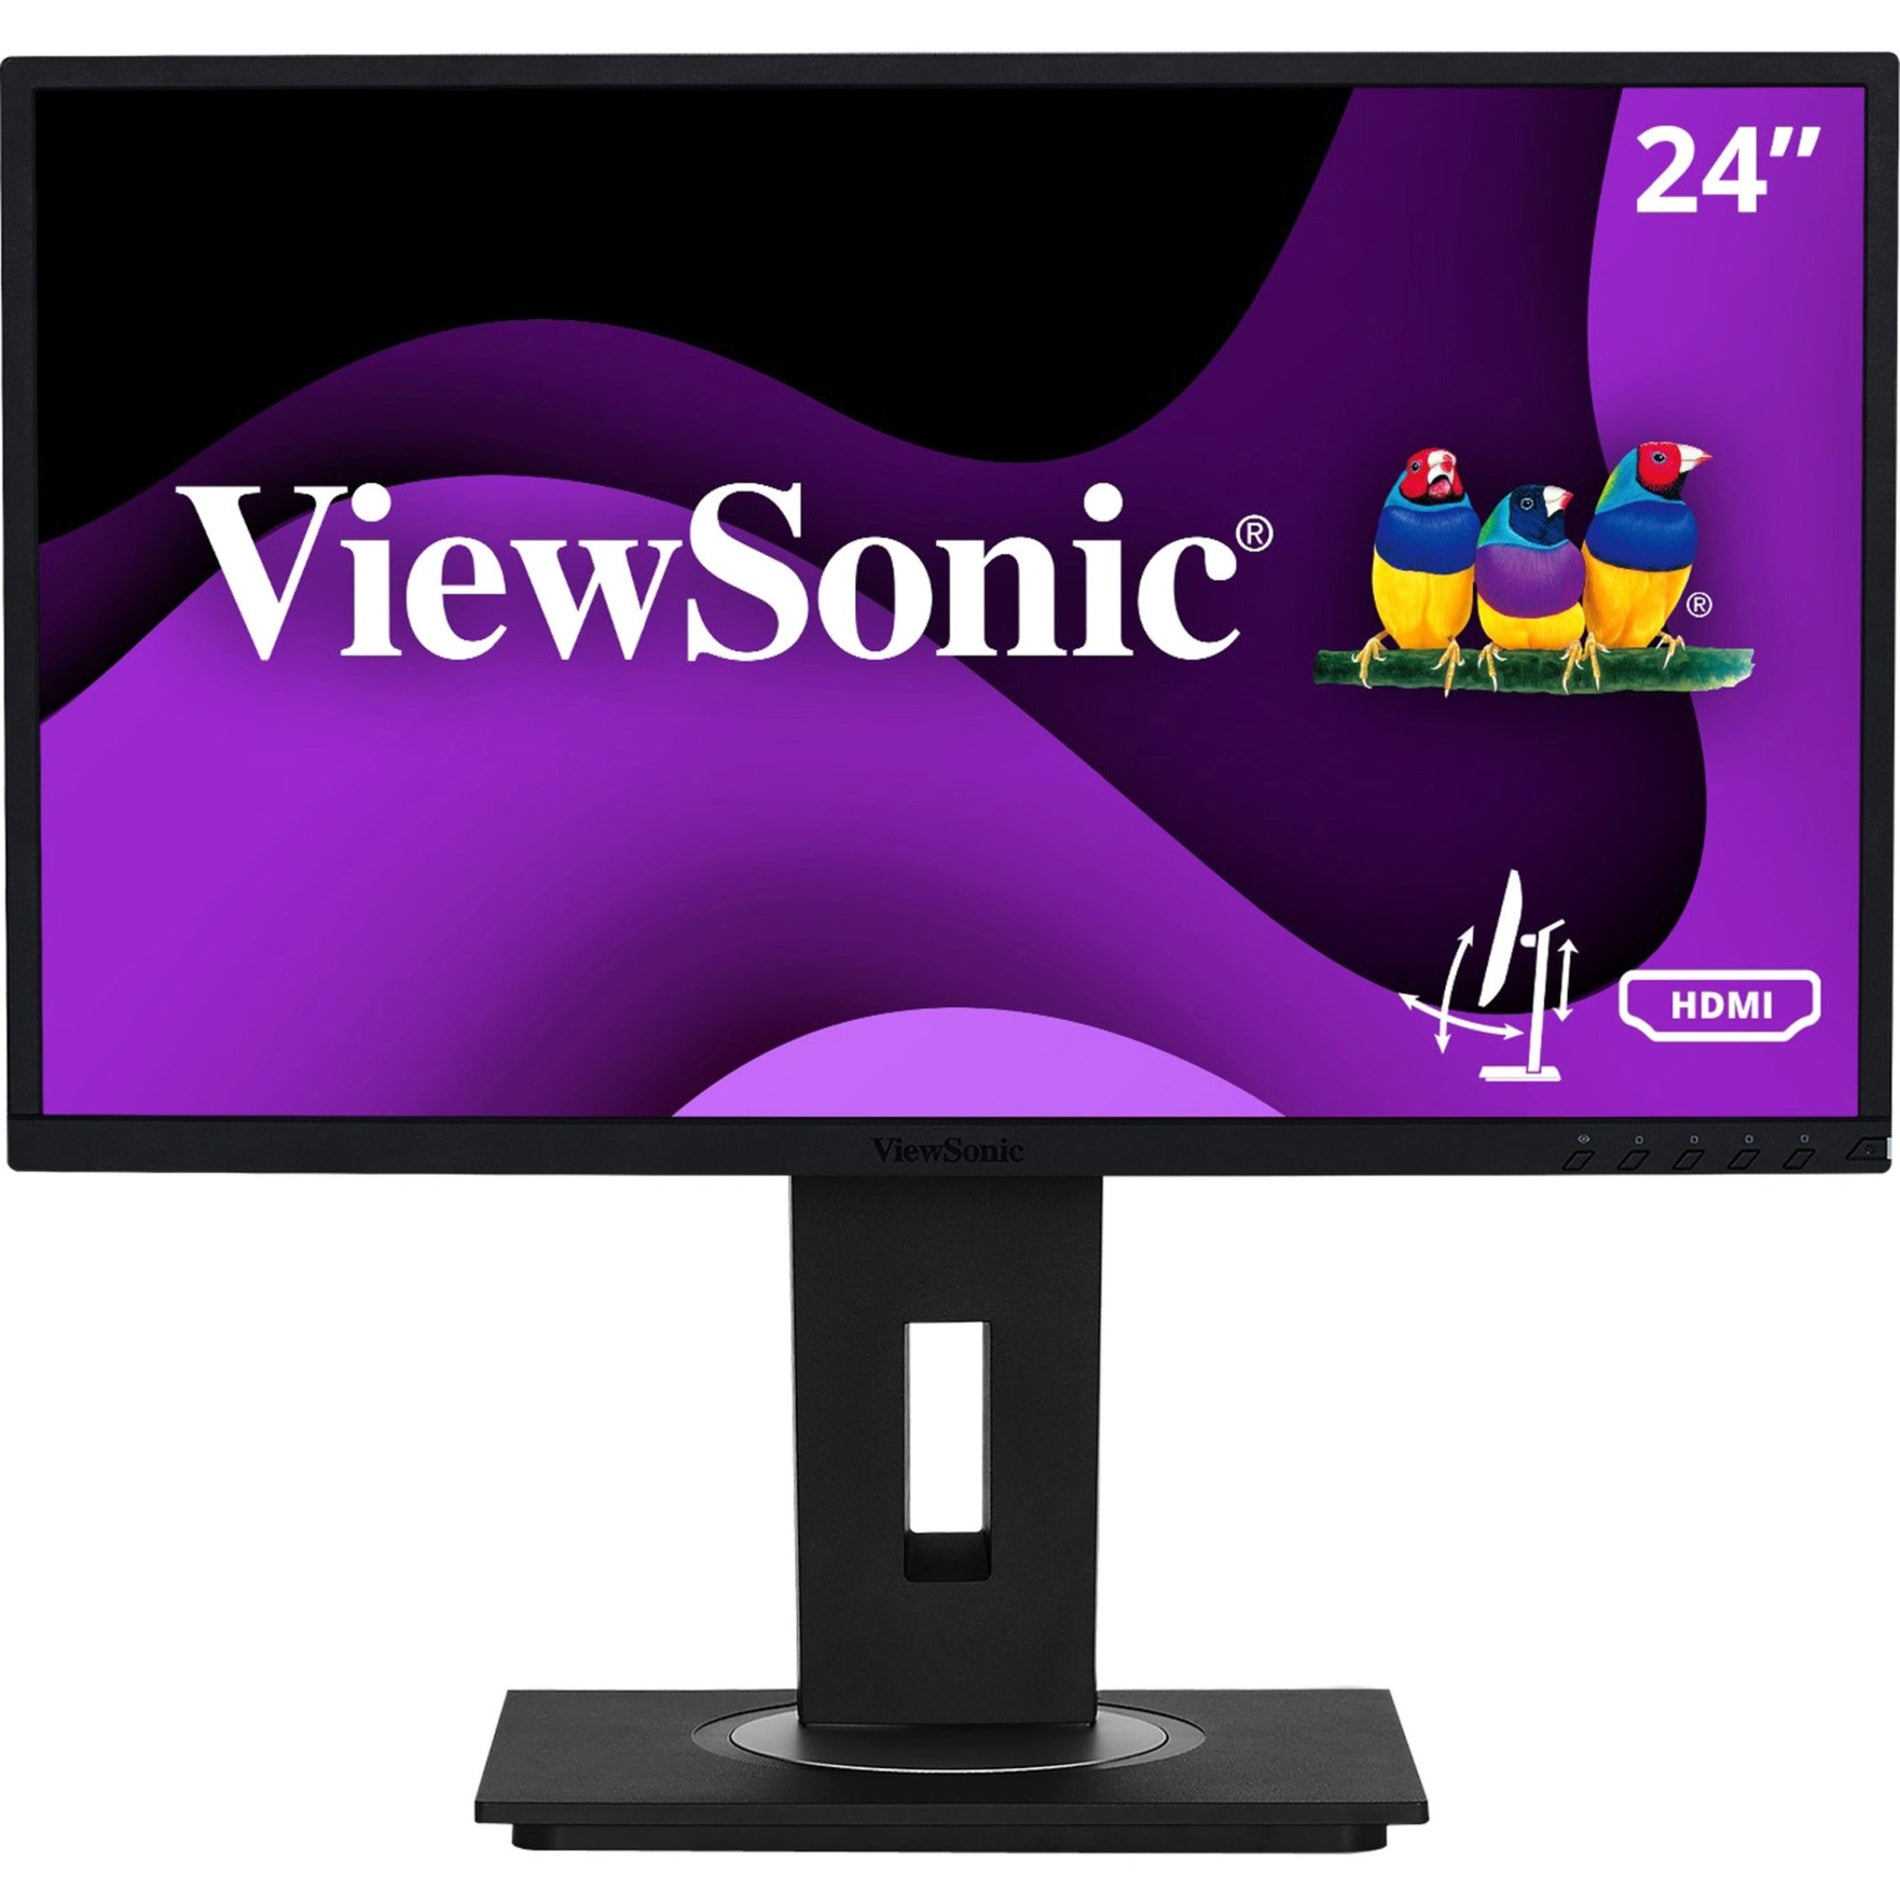 ViewSonic VG2448 Widescreen LCD Monitor, Full HD, 24", VGA HDMI DisplayPort, USB Hub, 3 Year Warranty